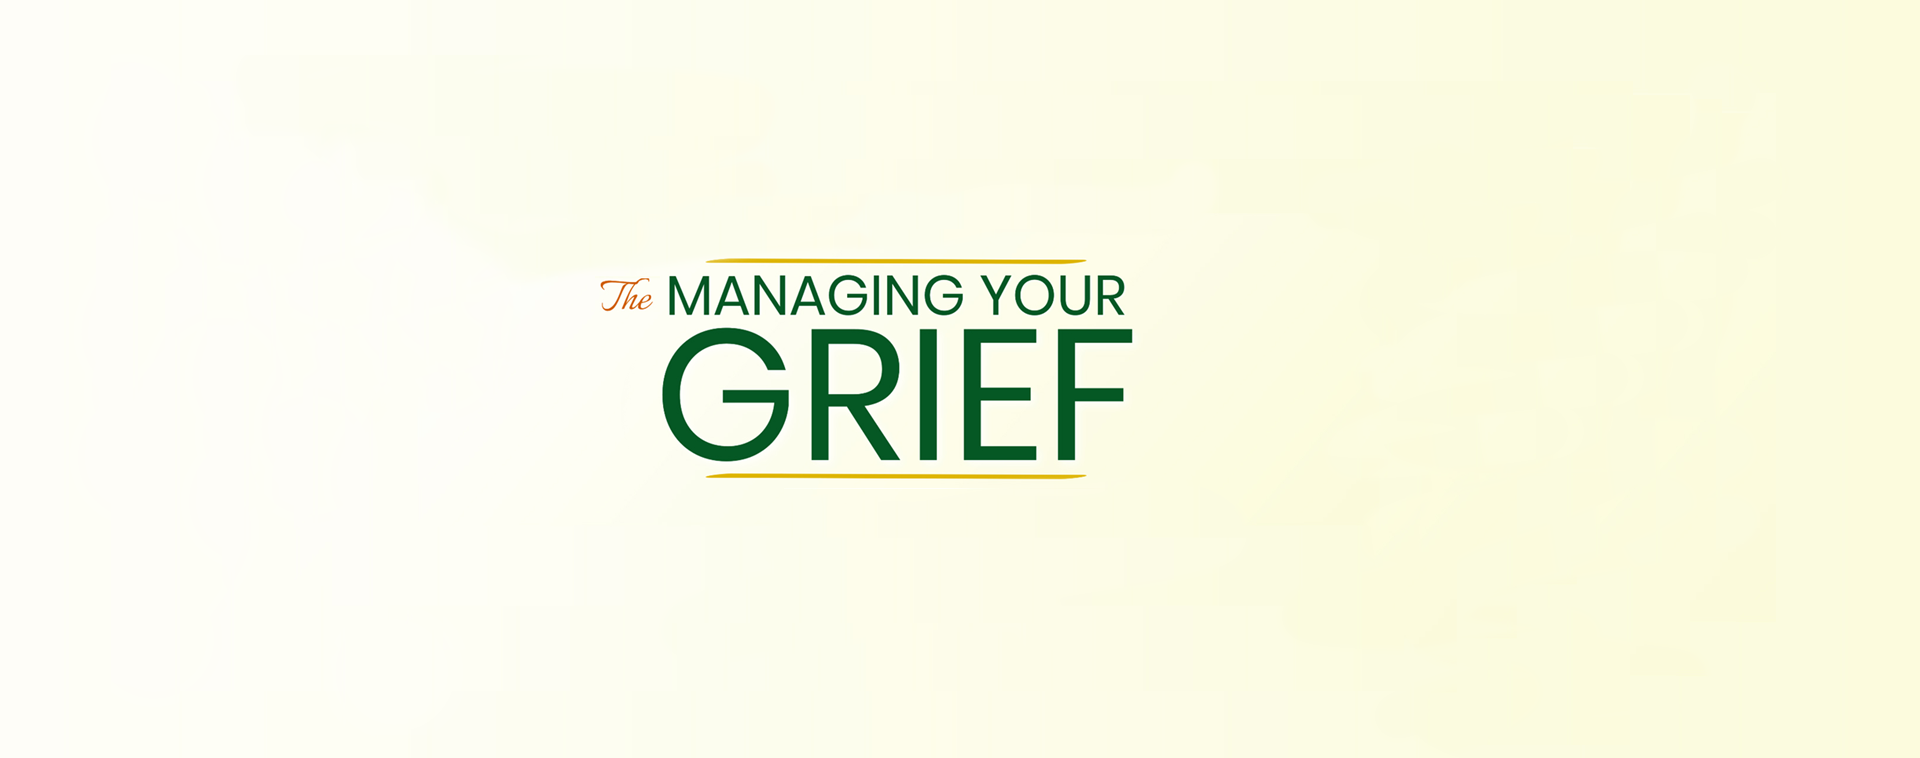 Donna J Scott , Author, Managing Your Grief, Christian Leadership Guide, Huntsville al